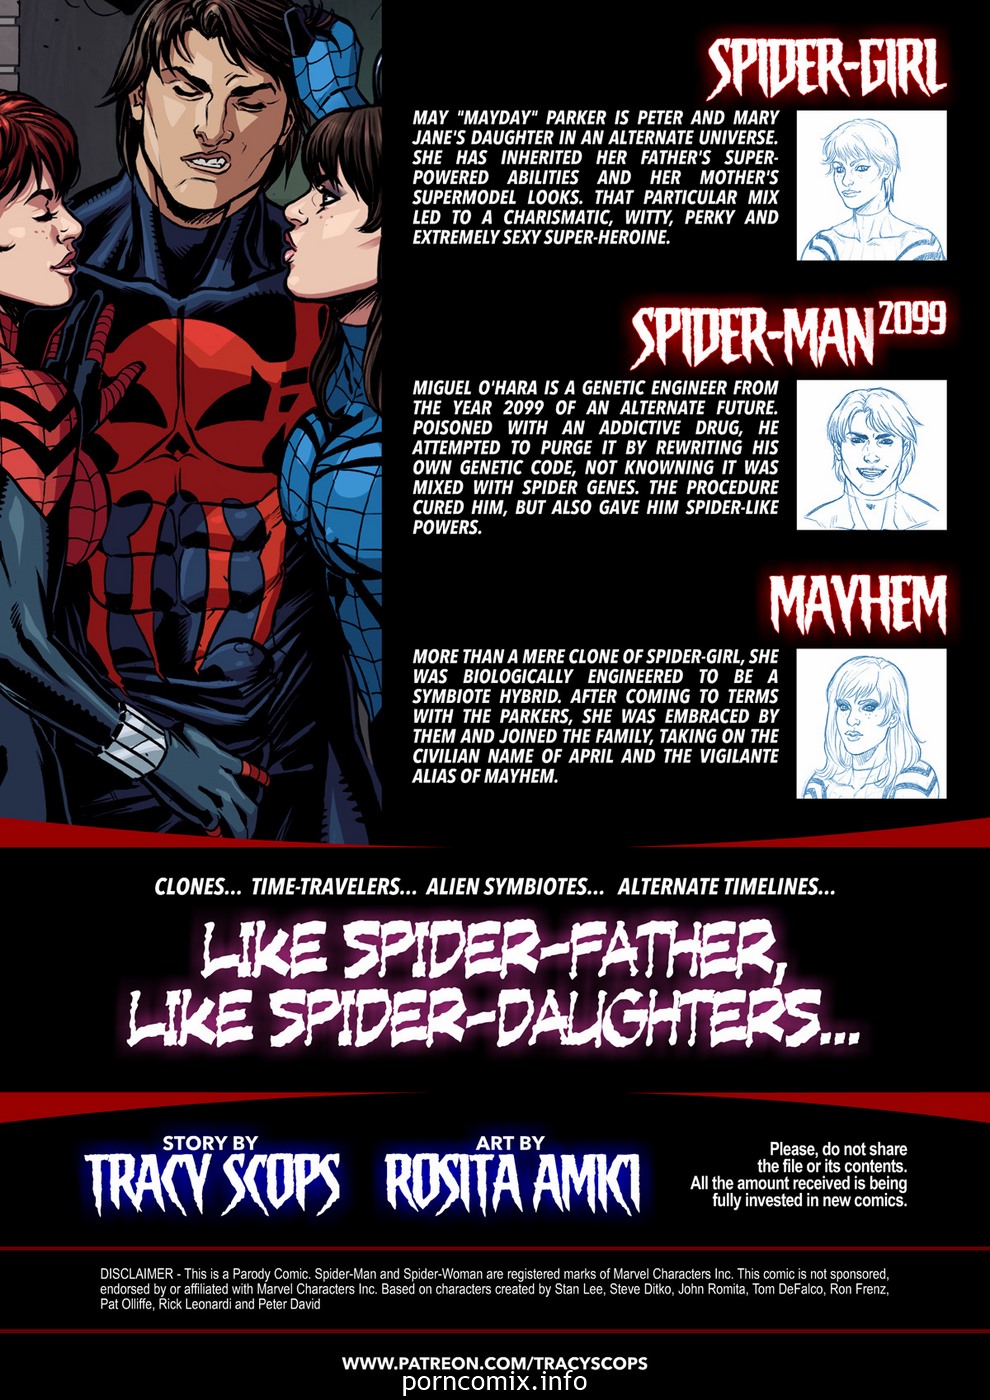 Spidergirl spiderman 2099 parody tracy